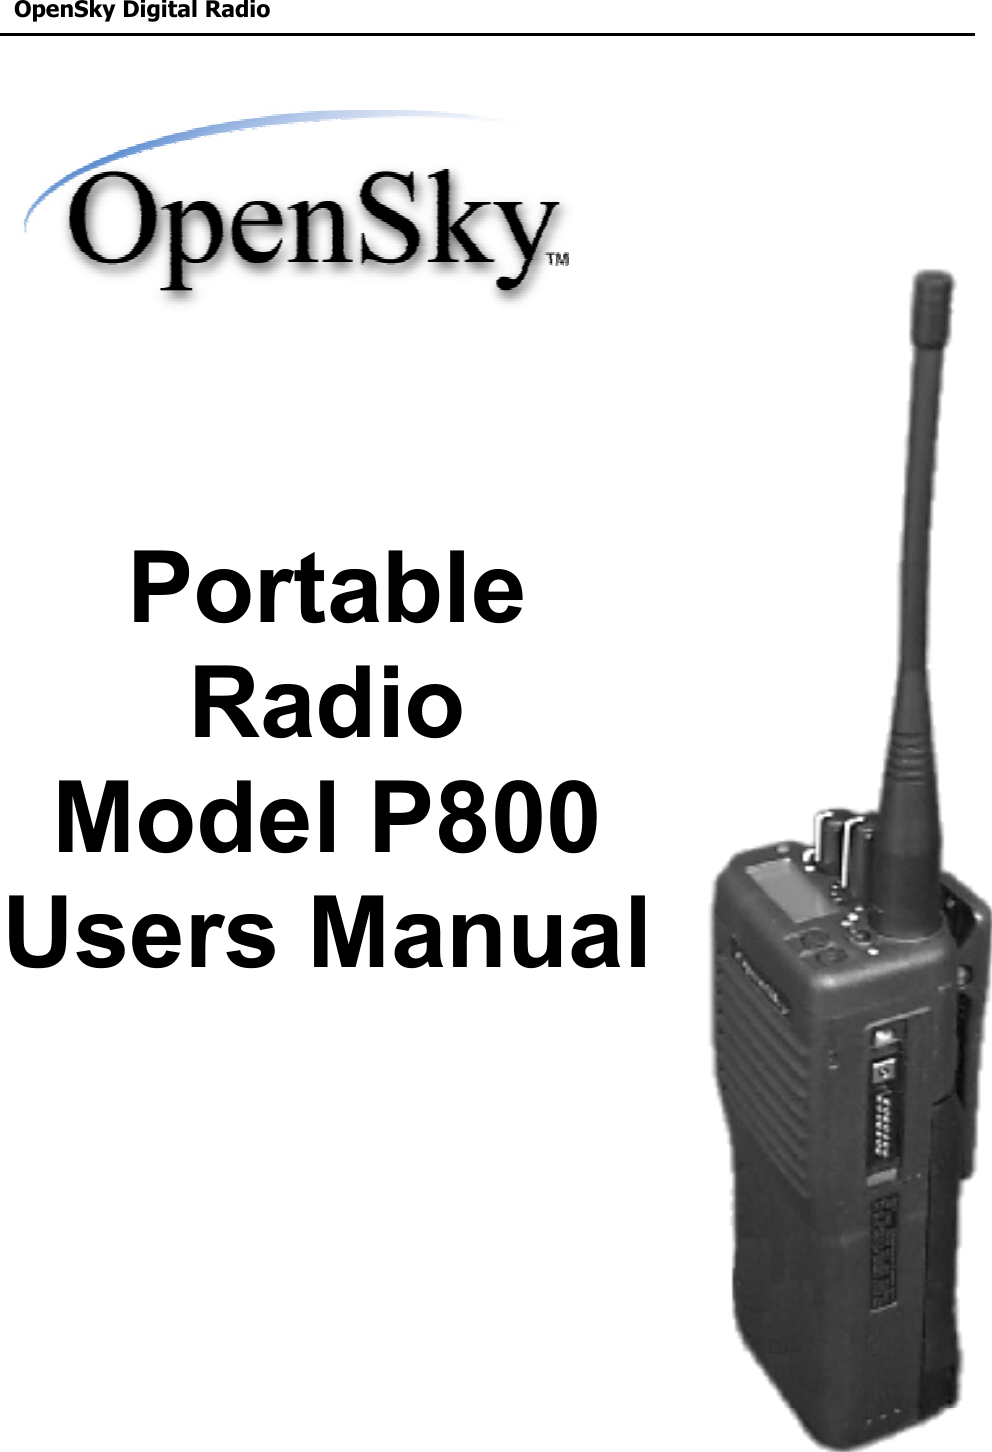     OpenSky Digital Radio  Portable Radio Model P800 Users Manual   